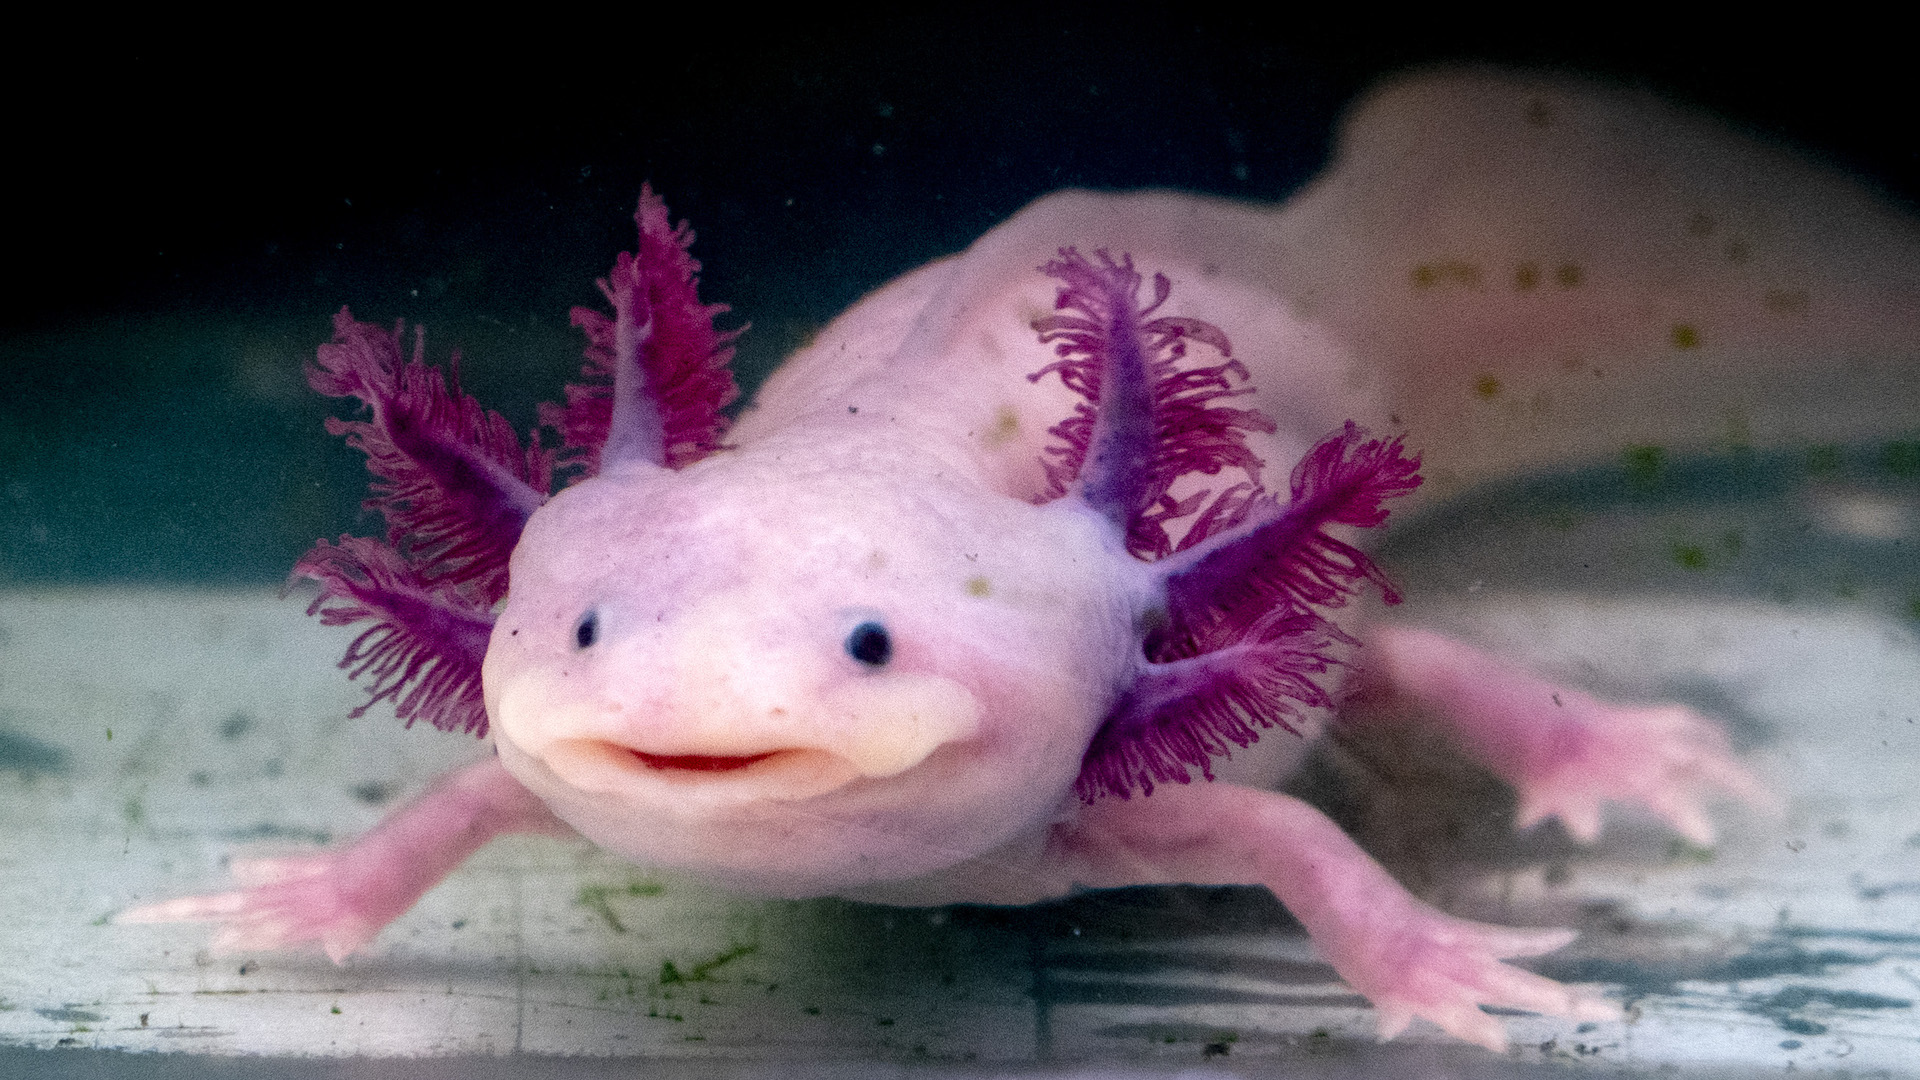 An cheeky axolotl